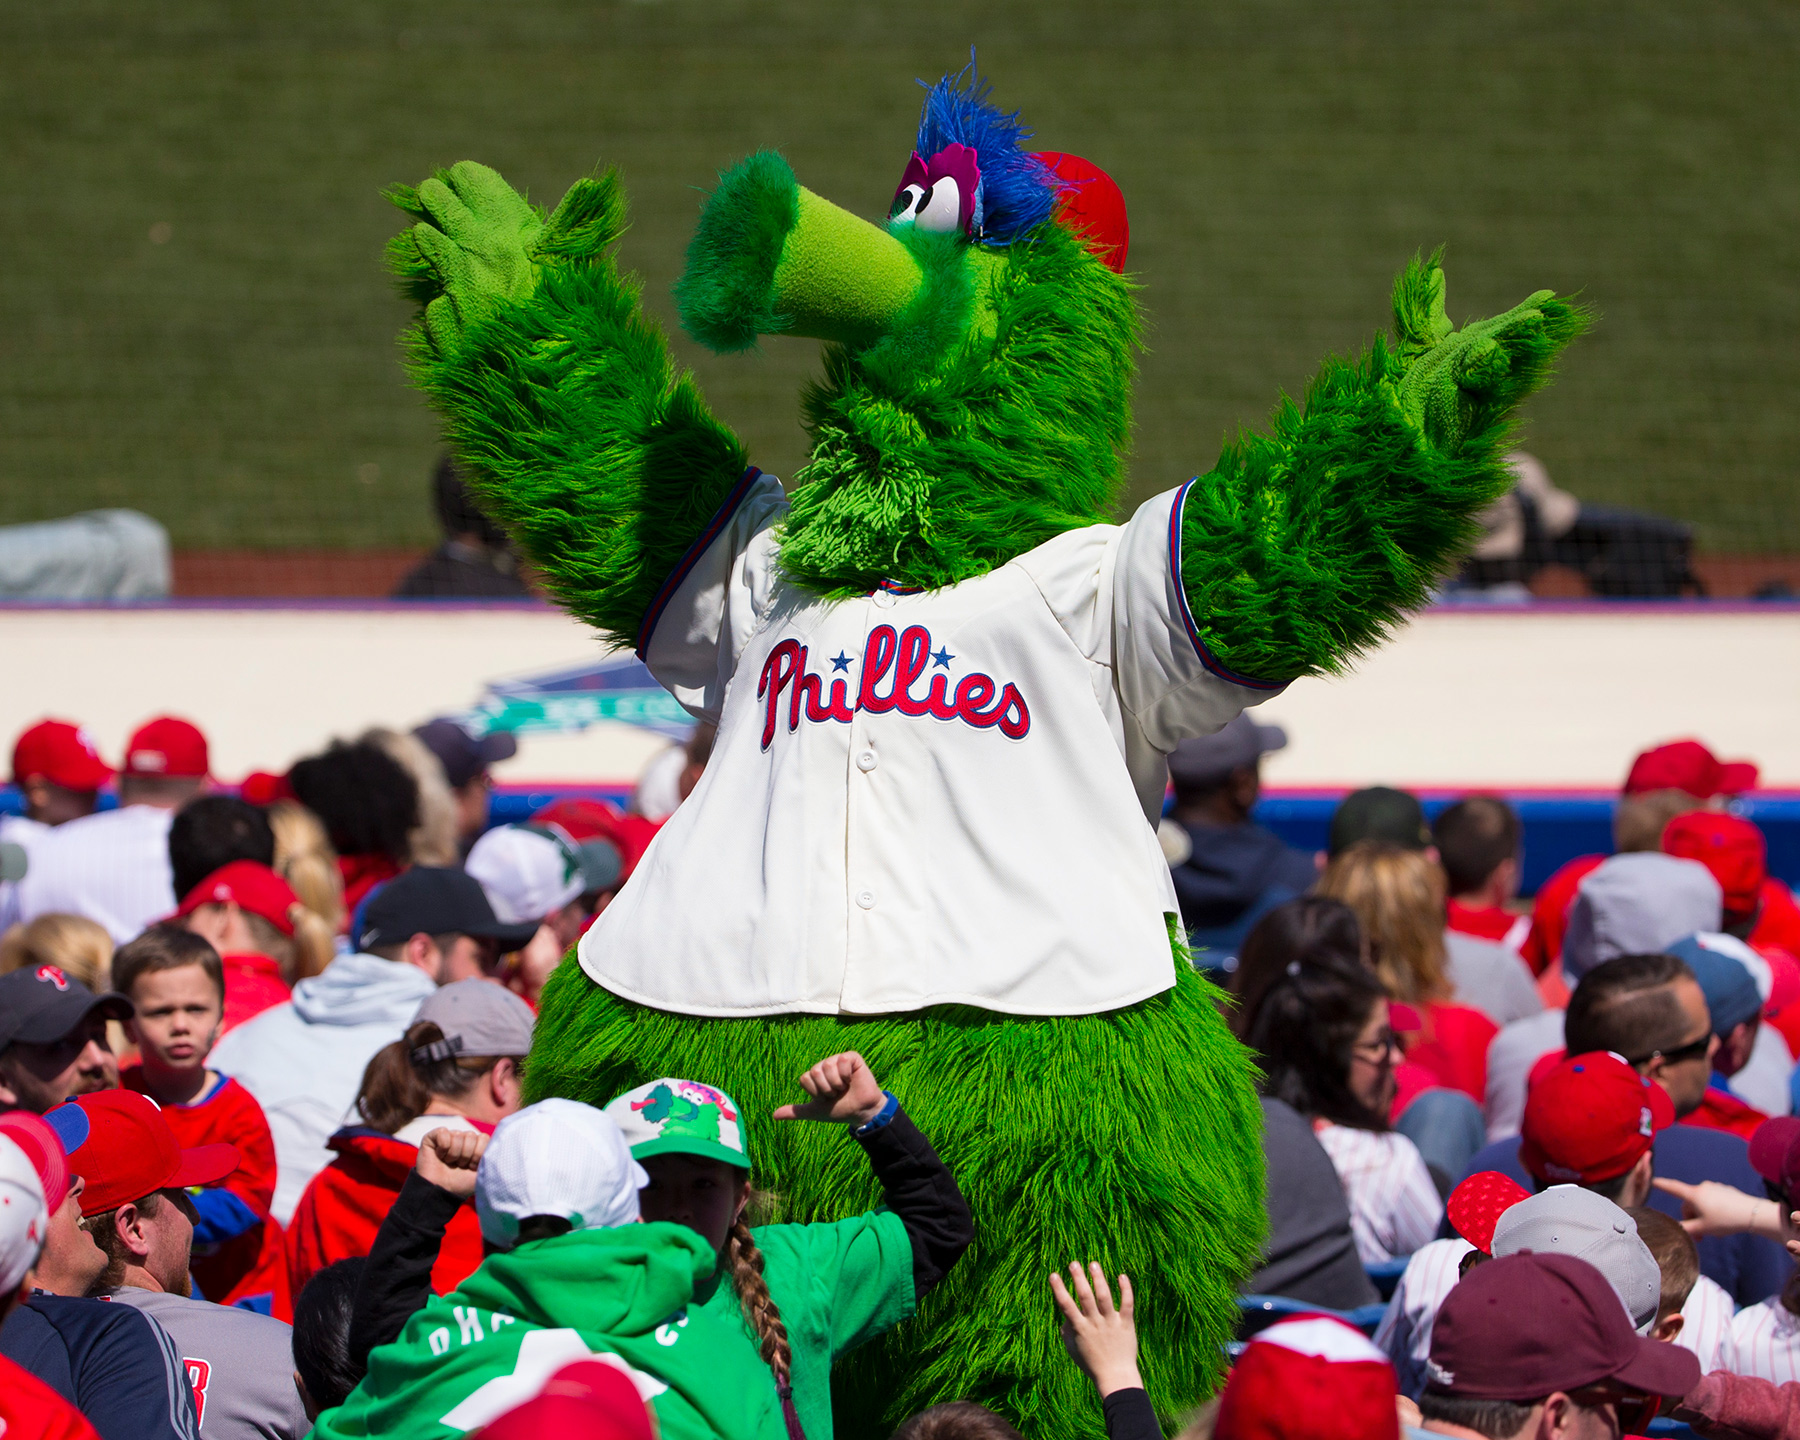 Philadelphia Phillies Mascot - Phillie Phanatic